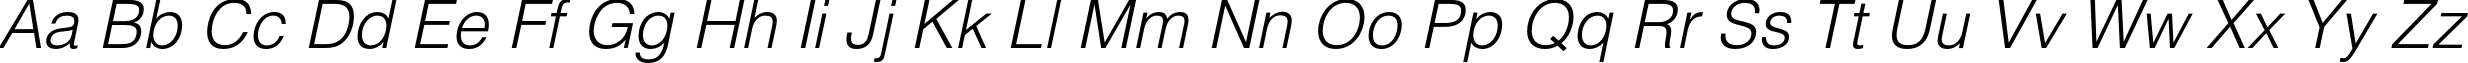 Пример написания английского алфавита шрифтом HeliosLight Italic